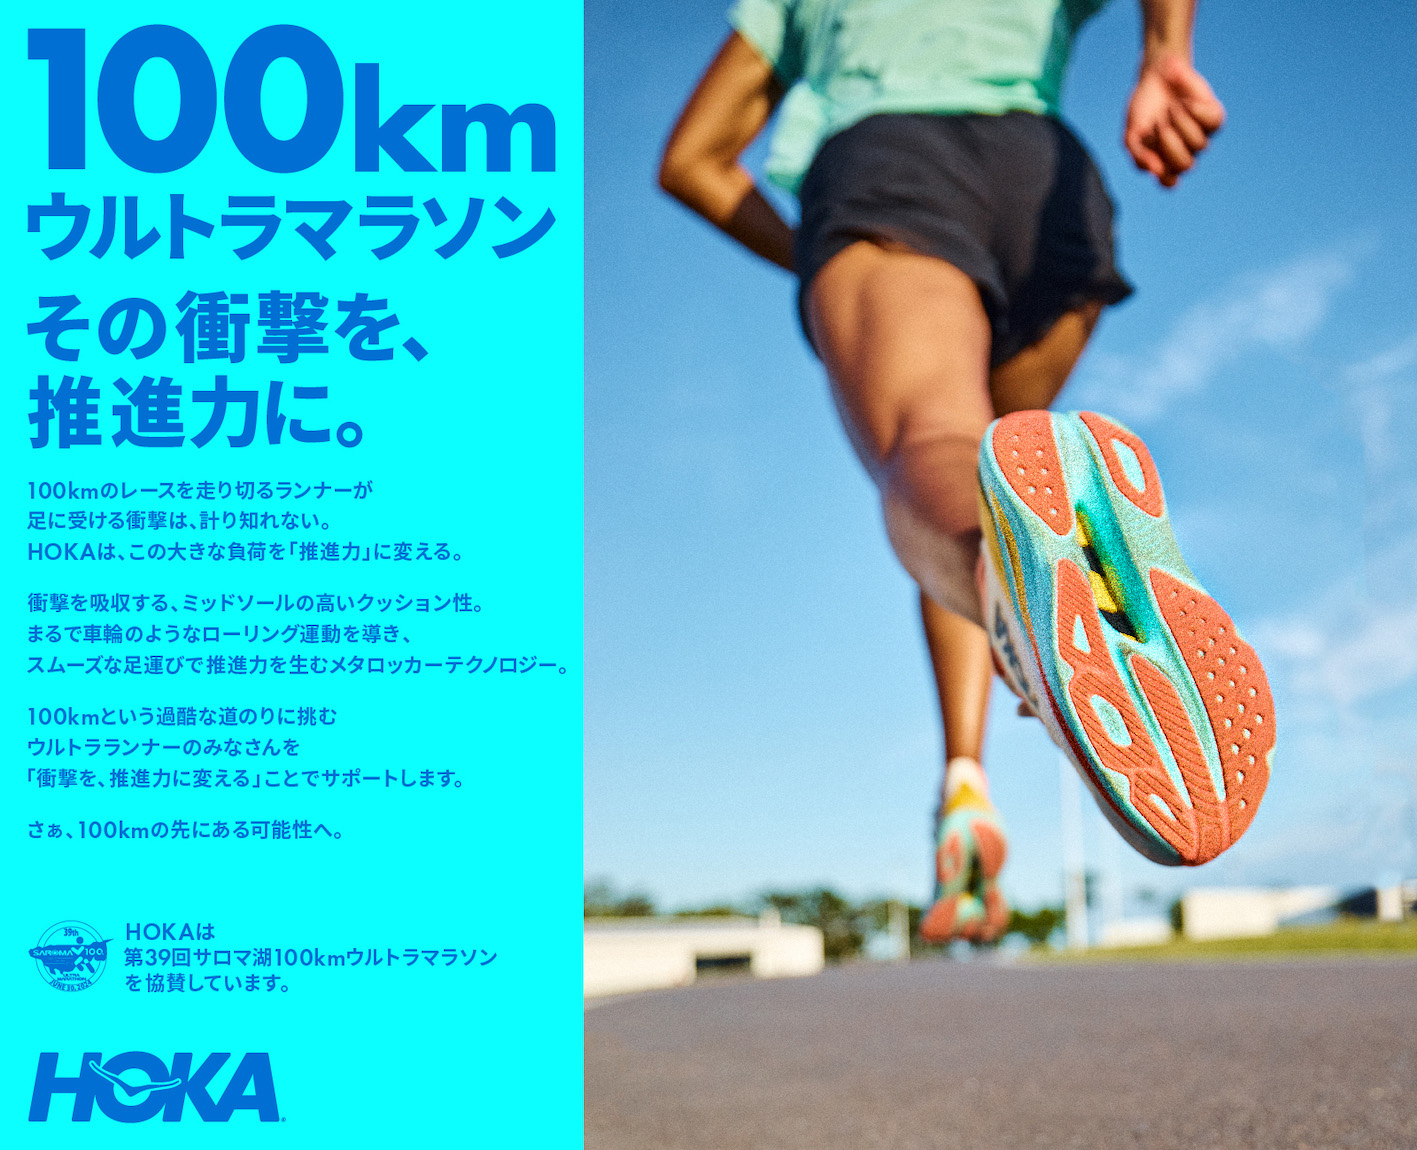 100kmの世界記録に挑戦するウルトラランナーをHOKAが応援。「HOKA 100km ワールドチャンピオンシップチャレンジ」第2弾を実施